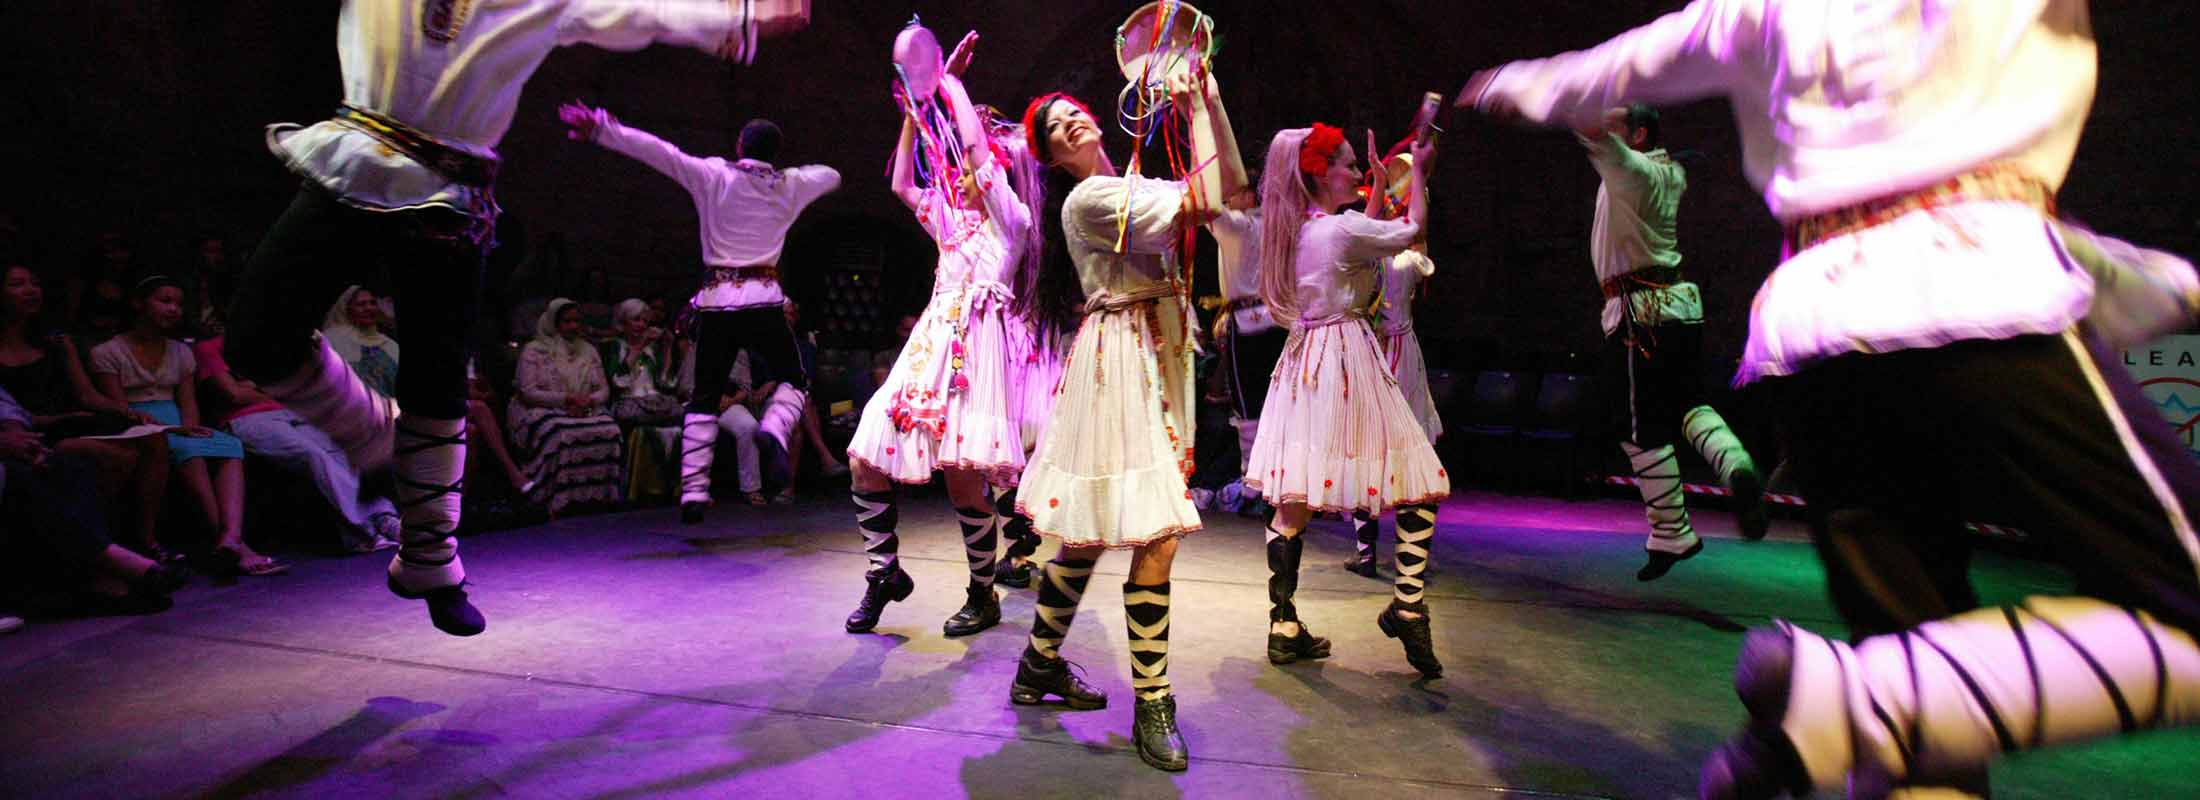 istanbul-turkish-dance-show-modern-folklore-show